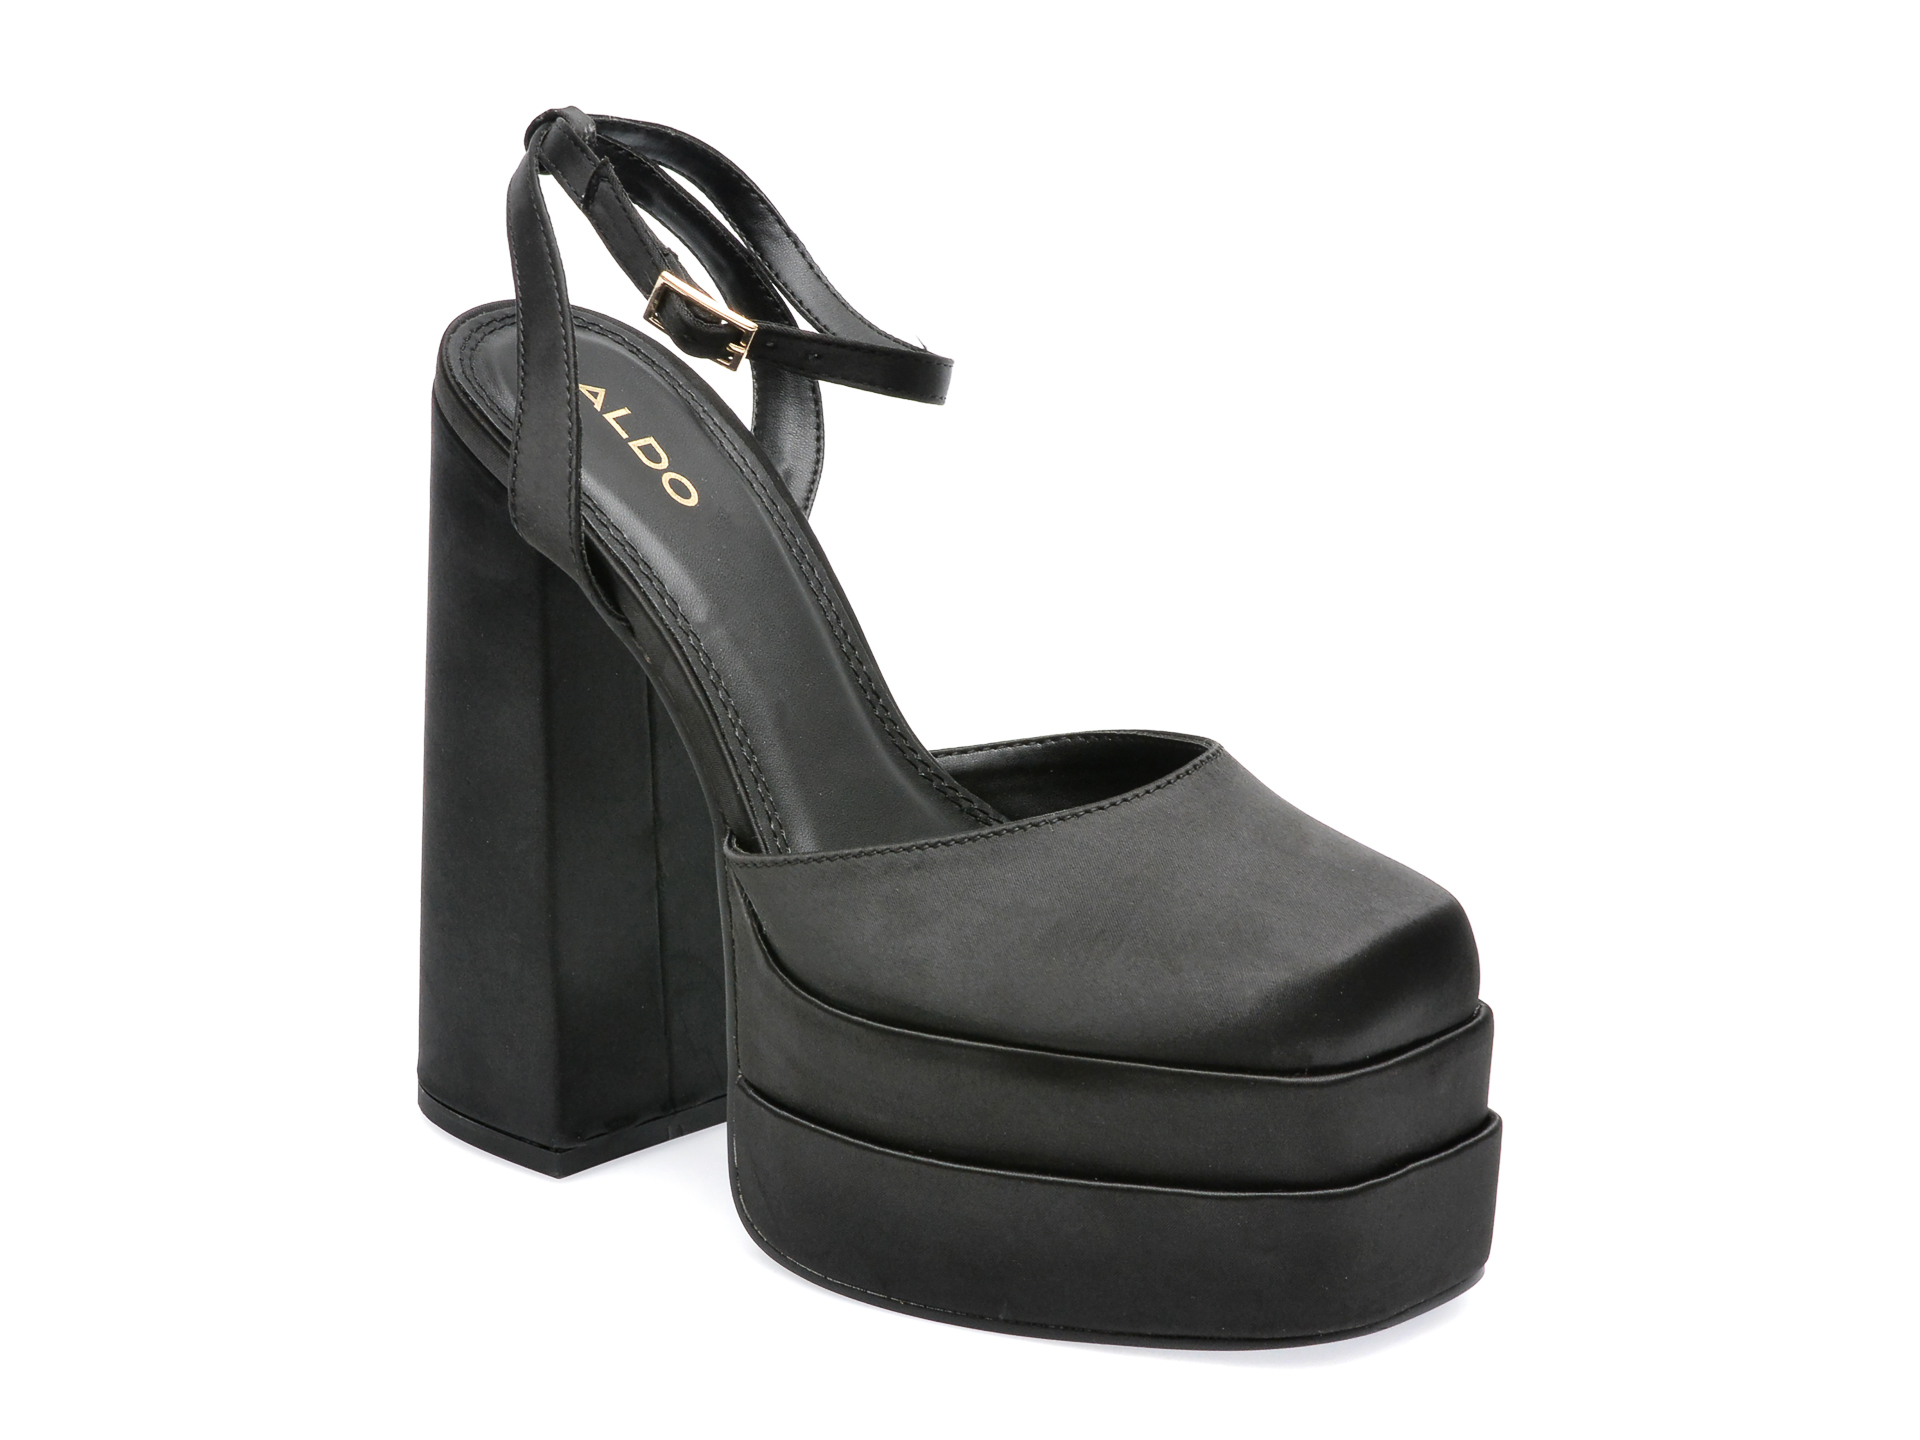 Pantofi ALDO negri, KERSAUDY001, din material textil femei 2023-02-03